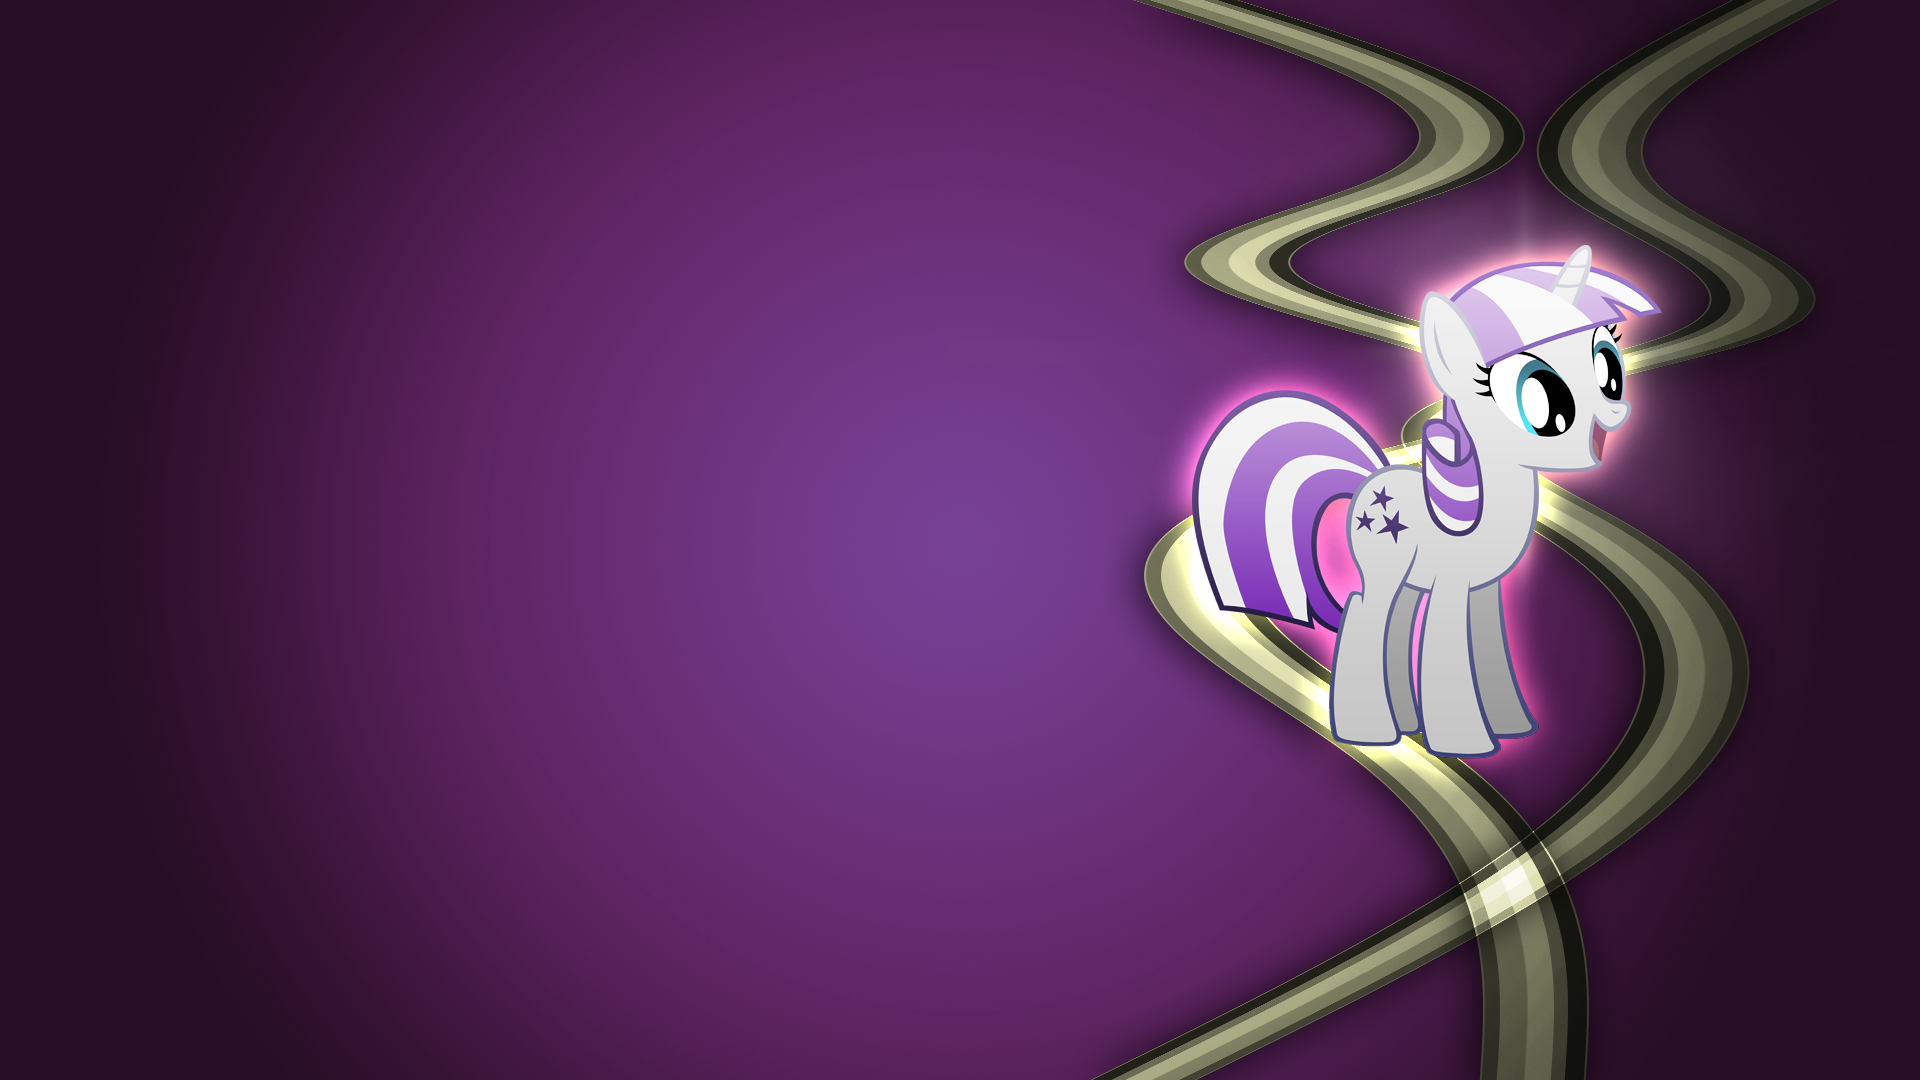 BG Ponies - Star Sparkle by Blackm3sh and Episkopi